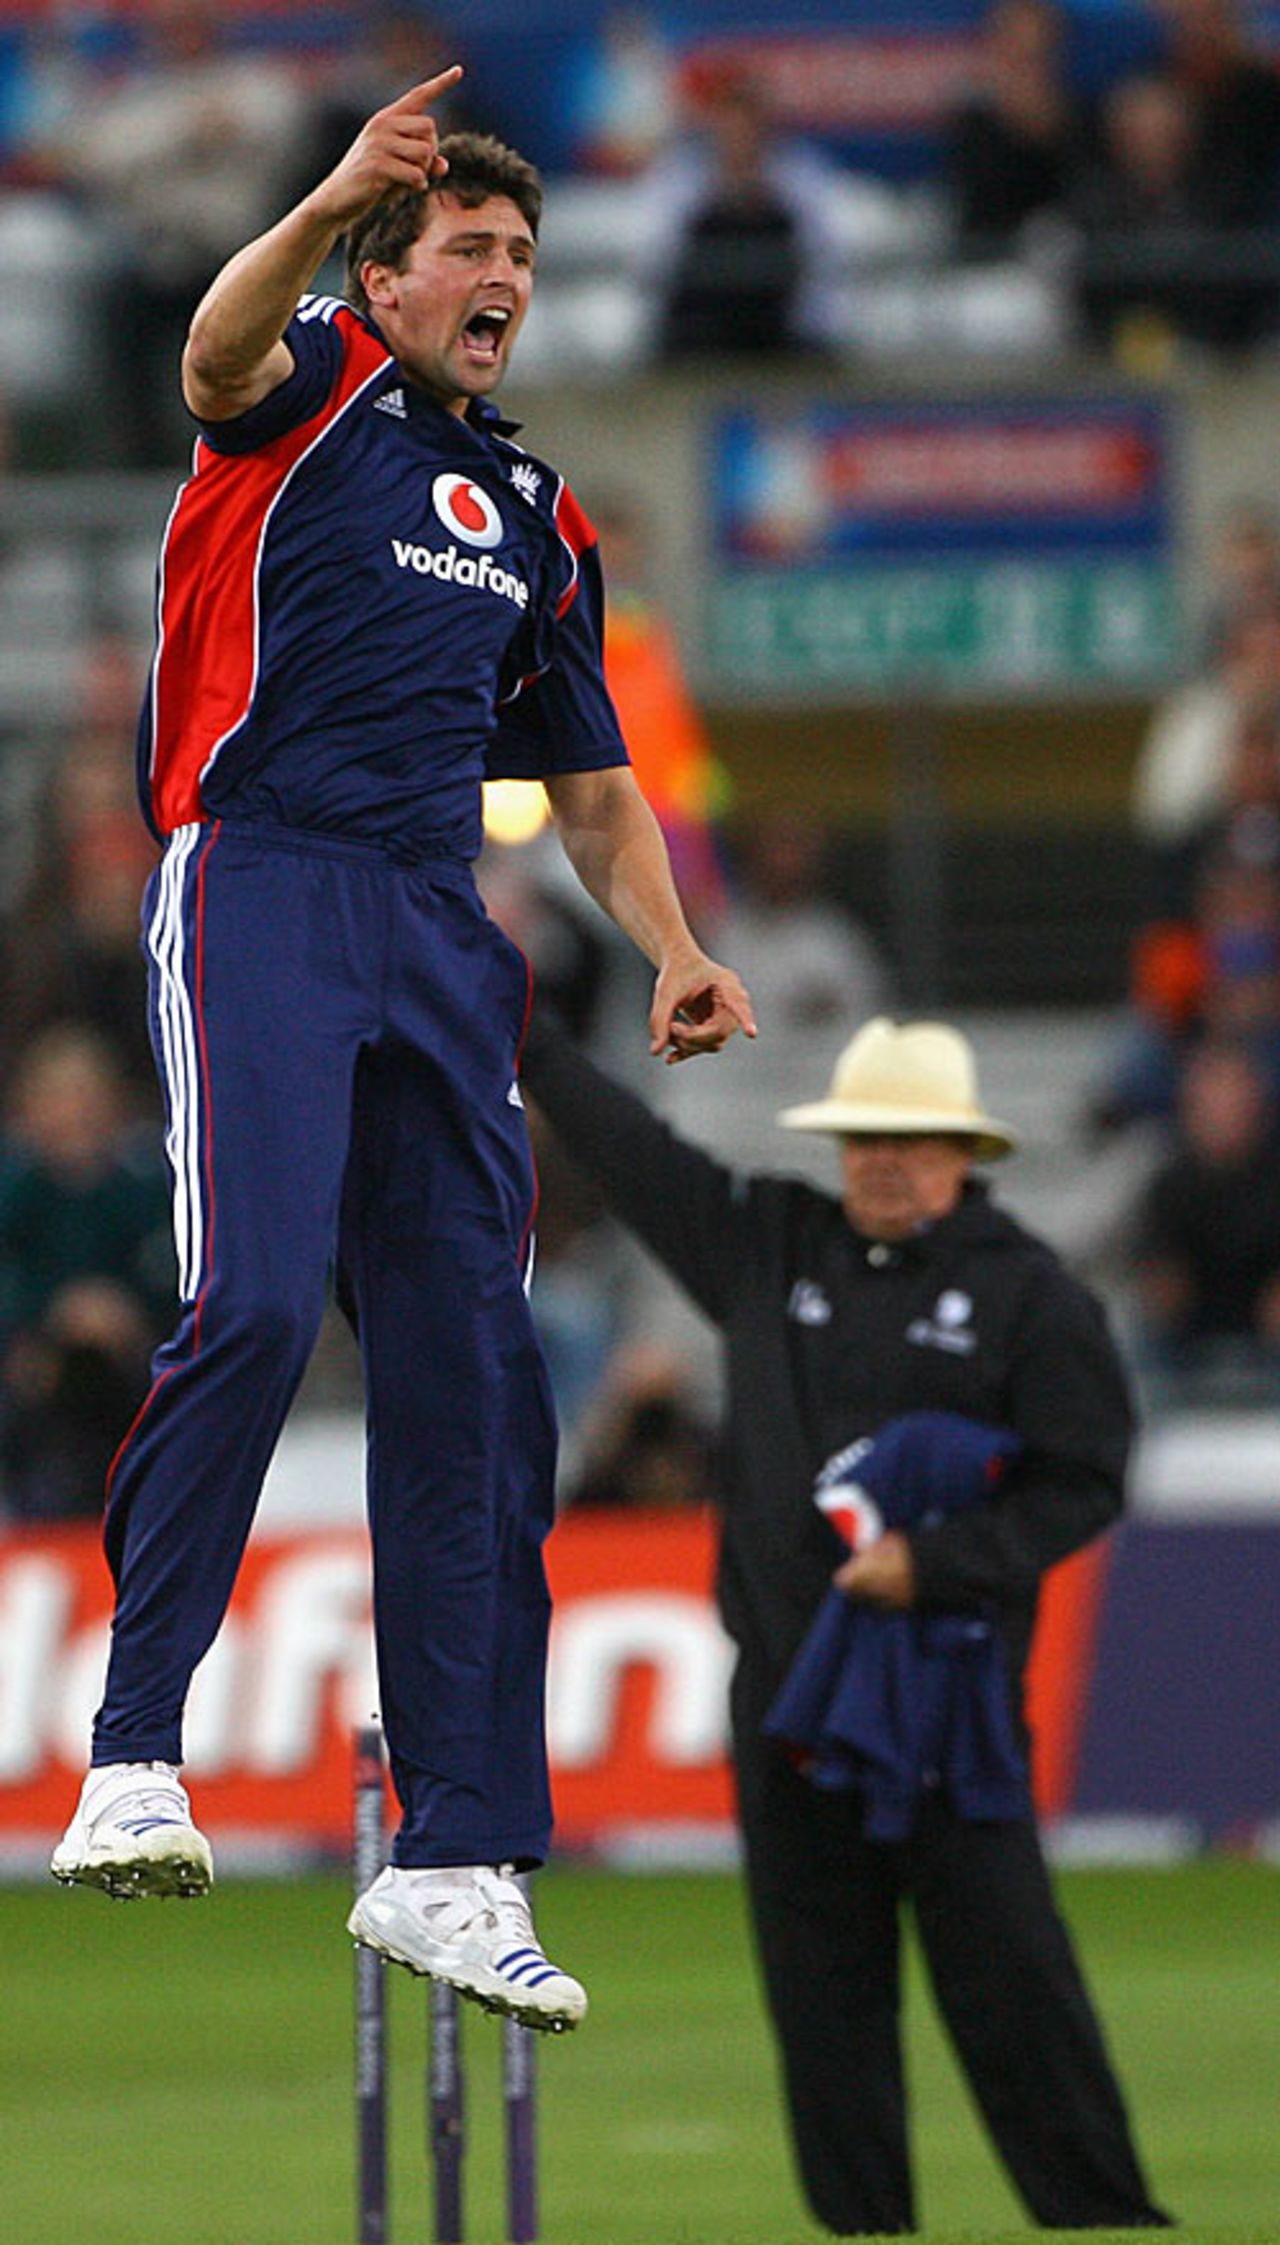 Steve Harmison celebrates the wicket of Graeme Smith, England v South Africa, 1st ODI, Headingley, August 22, 2008